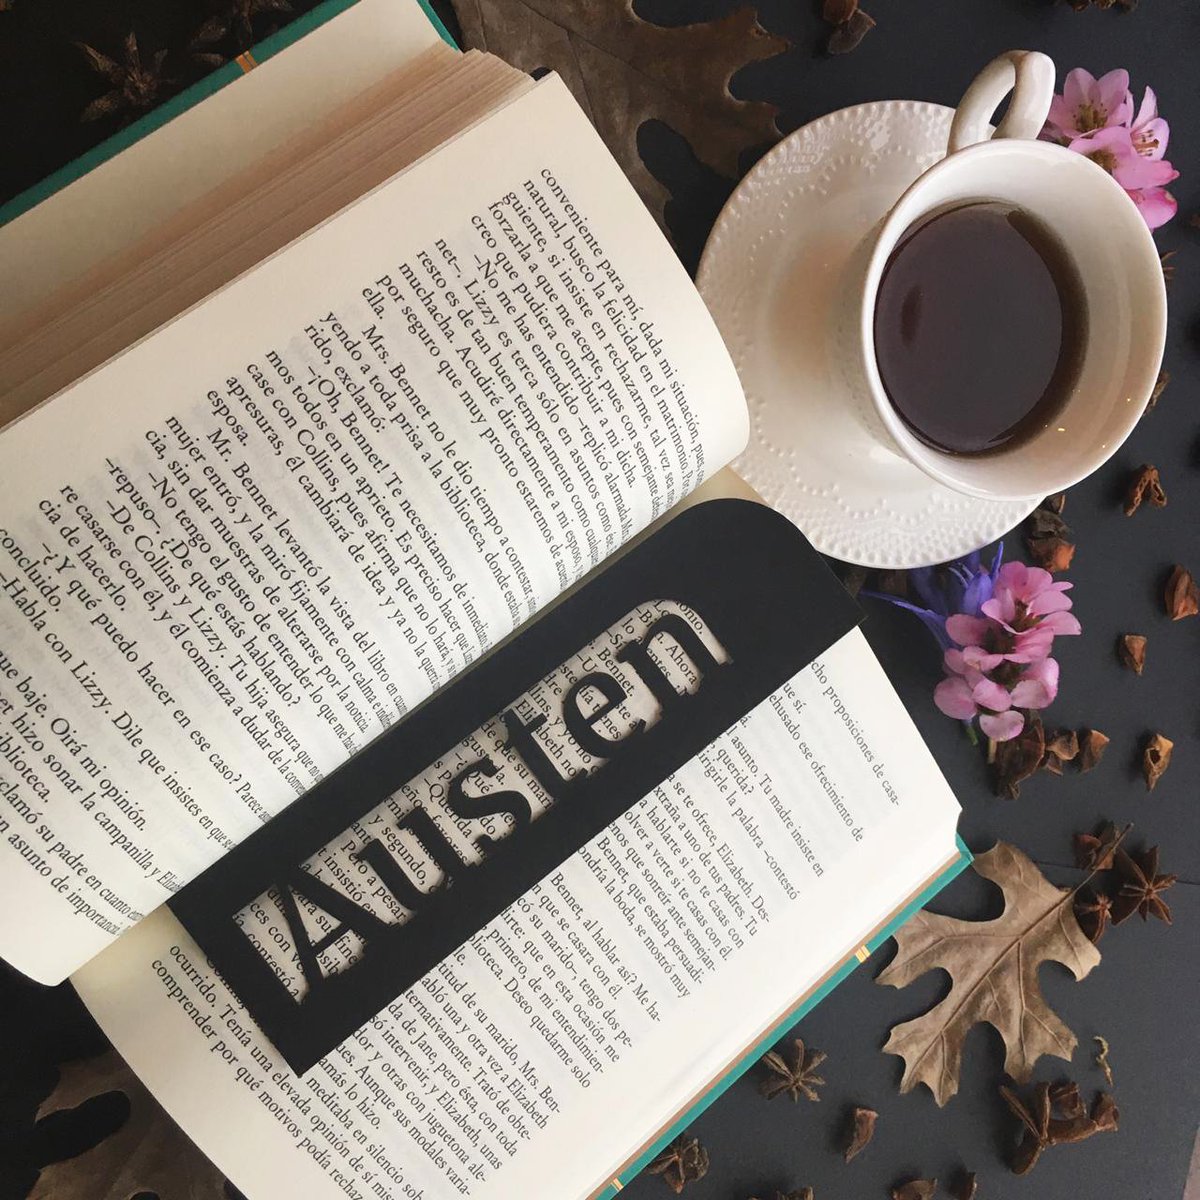 La historia detrás de una taza de café adecuada - Jane Austen articles and  blog